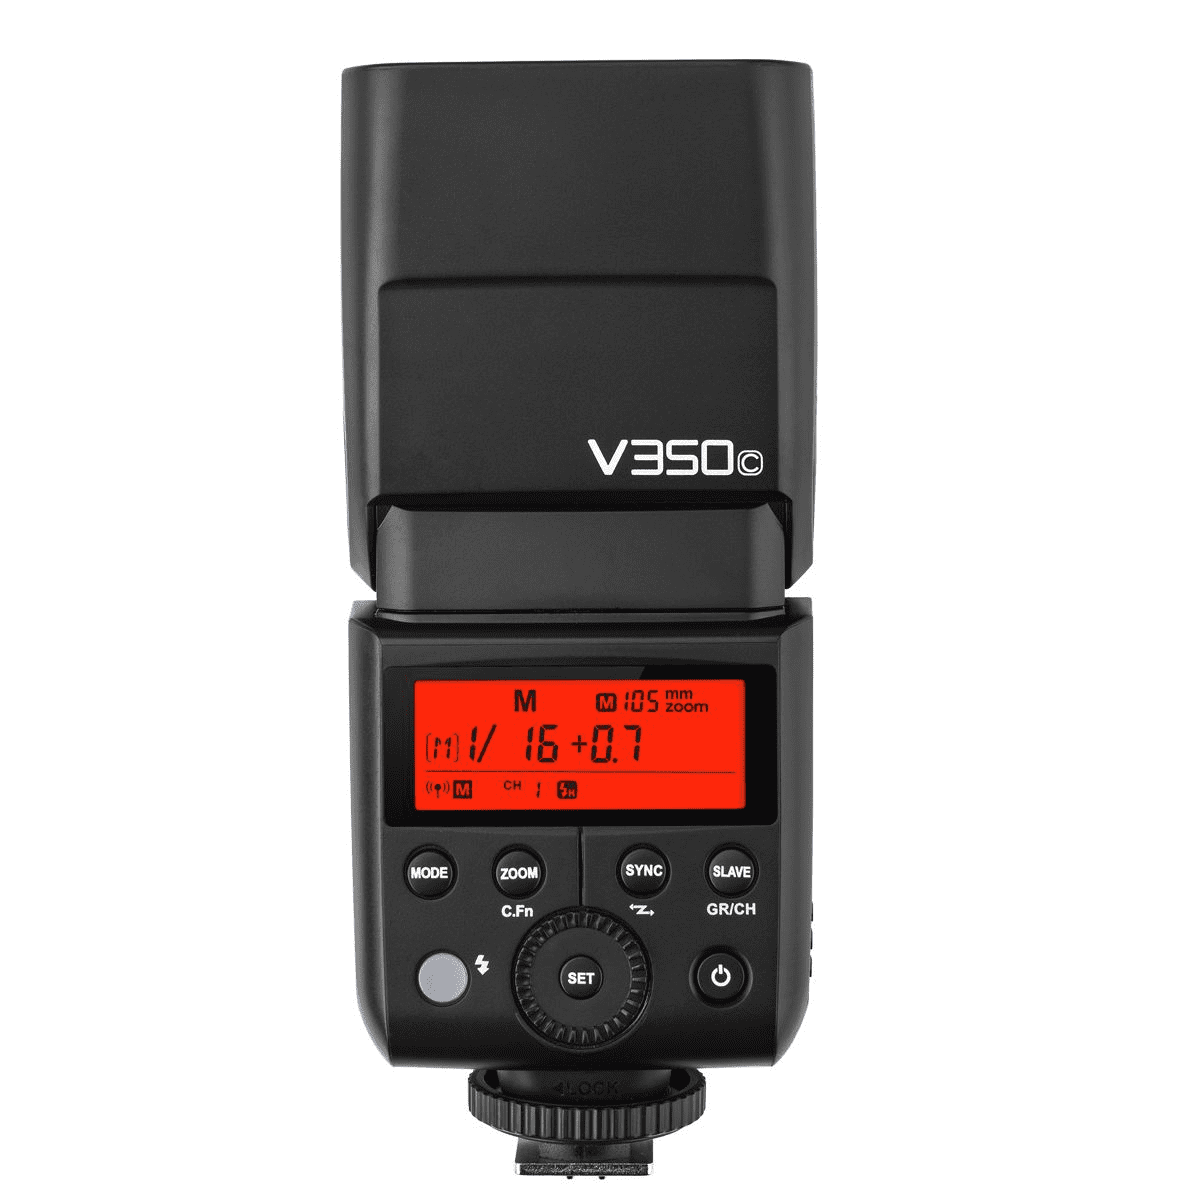 GODOX V350C TTL 2.4G HSS 1/8000s GN36 Li-ion Battery Camera Flash Speedlite with XPro-C Wireless Flash Trigger for Canon M5 M3 1100D 1000D 7D 6D 5D 60D 50D 600D 500D 1DX Mark II 